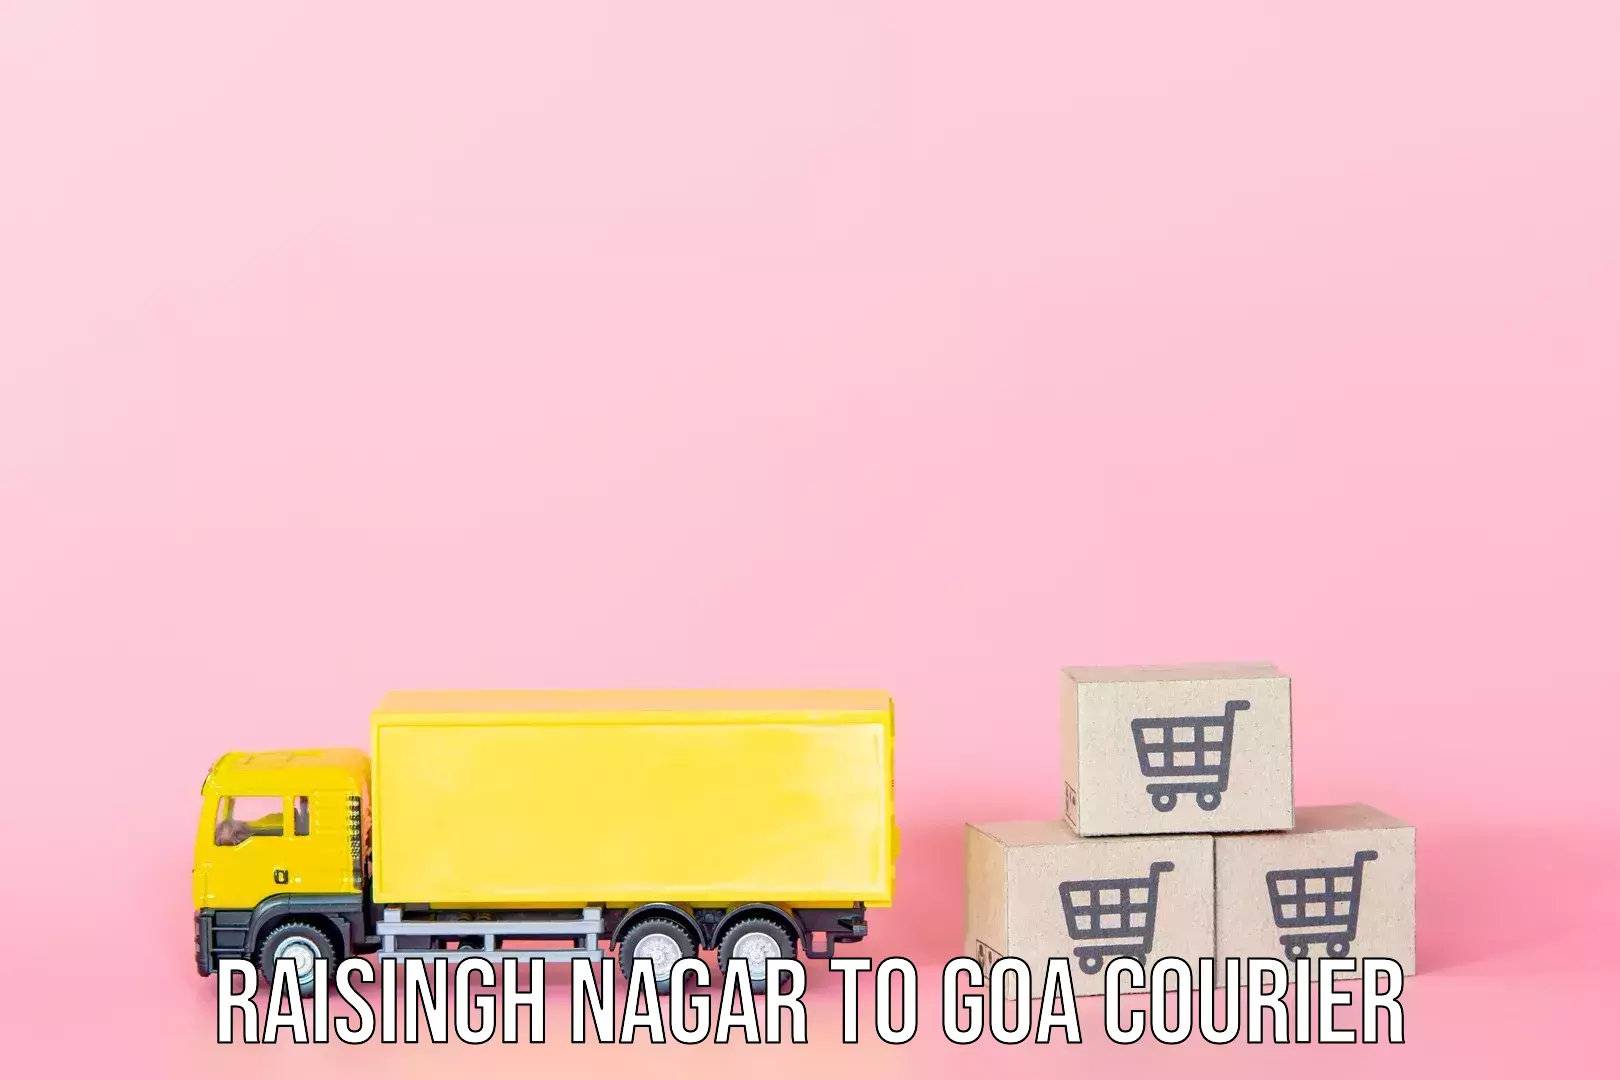 Emergency baggage service Raisingh Nagar to Goa